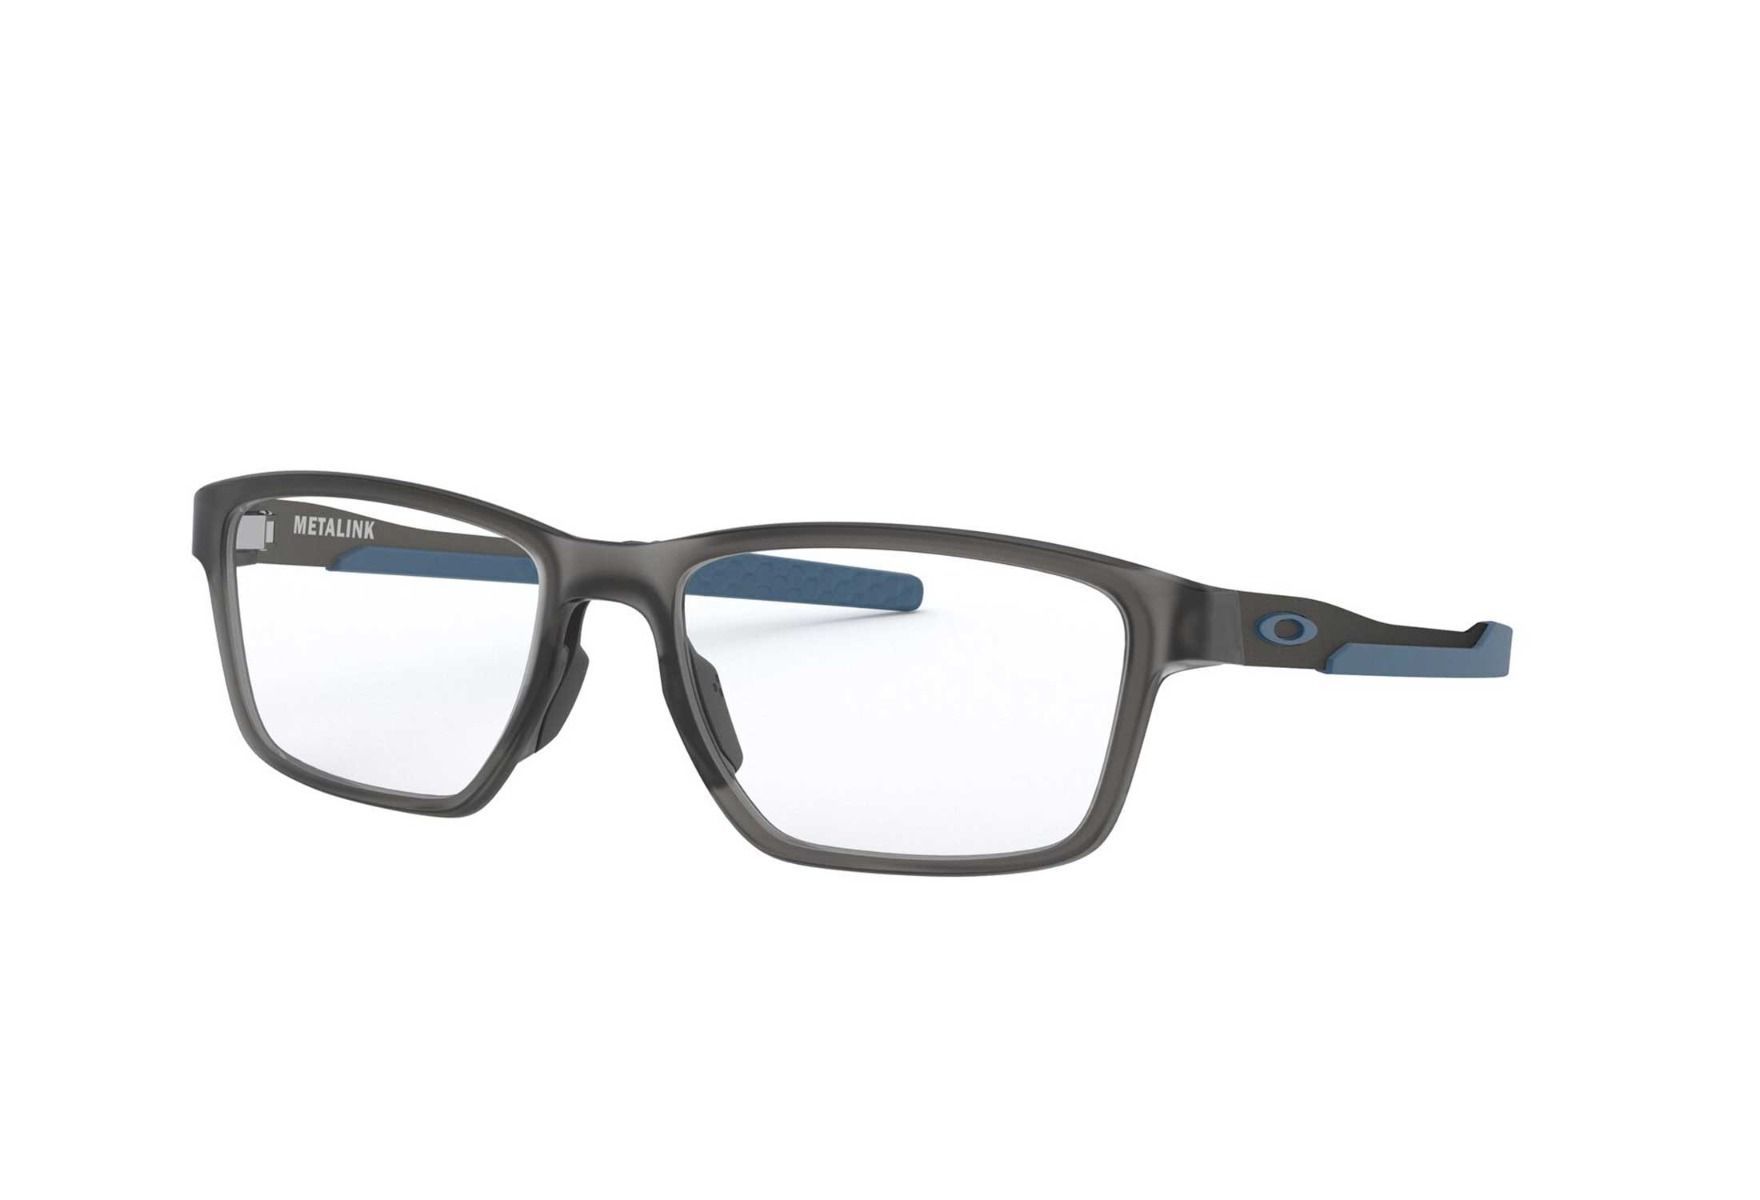 Oakley briller - Metalink - Svart, Large Hel ramme i Metall, Plast - Rektangulære